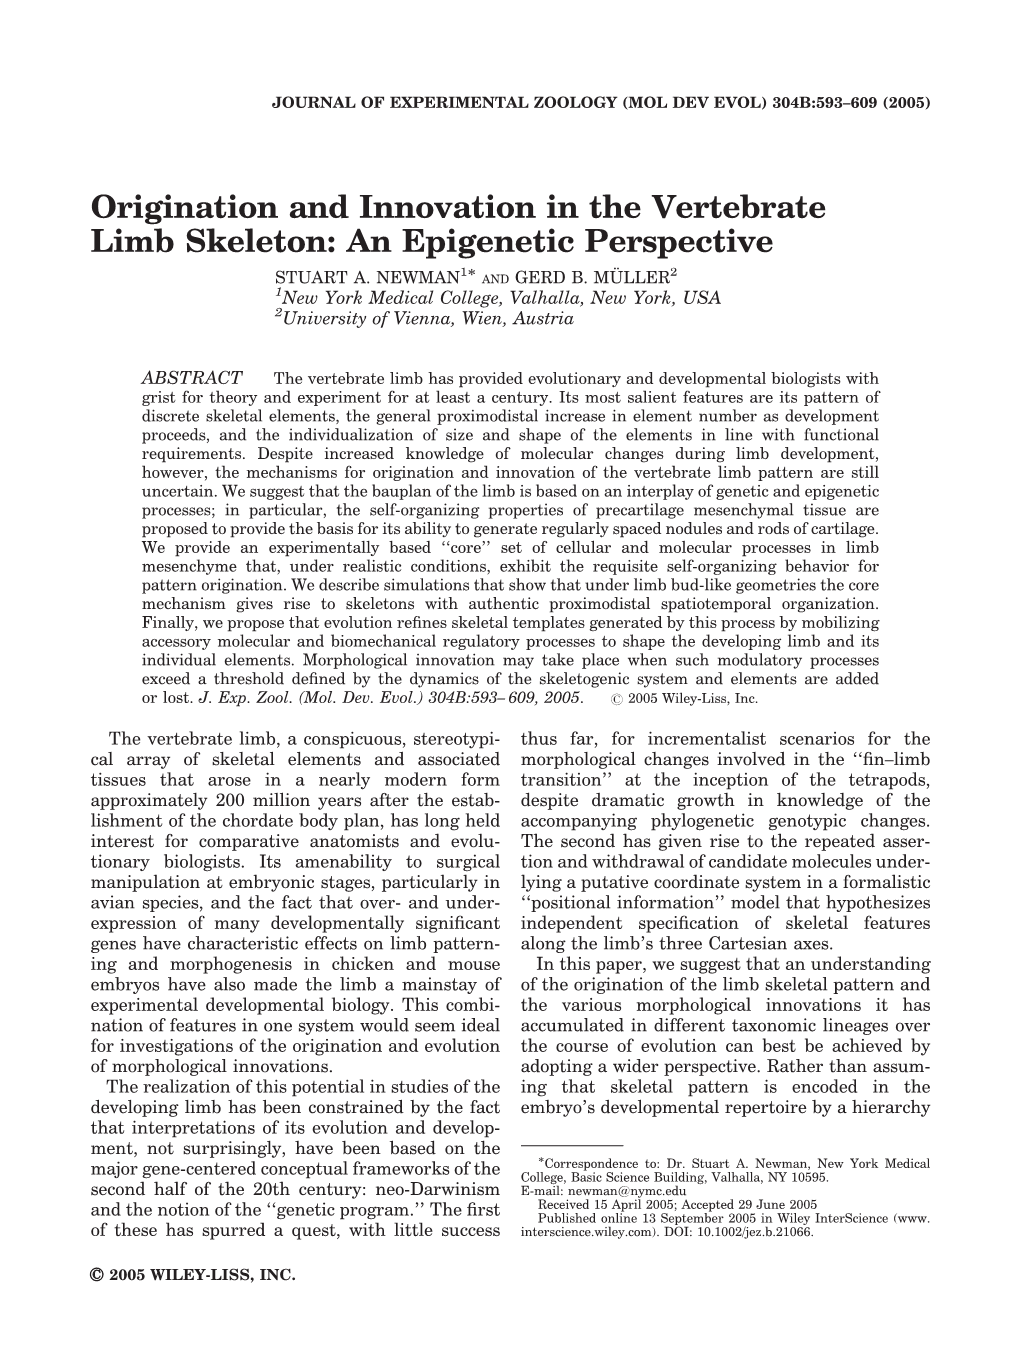 Origination and Innovation in the Vertebrate Limb Skeleton: an Epigenetic Perspective 1Ã 2 STUART A